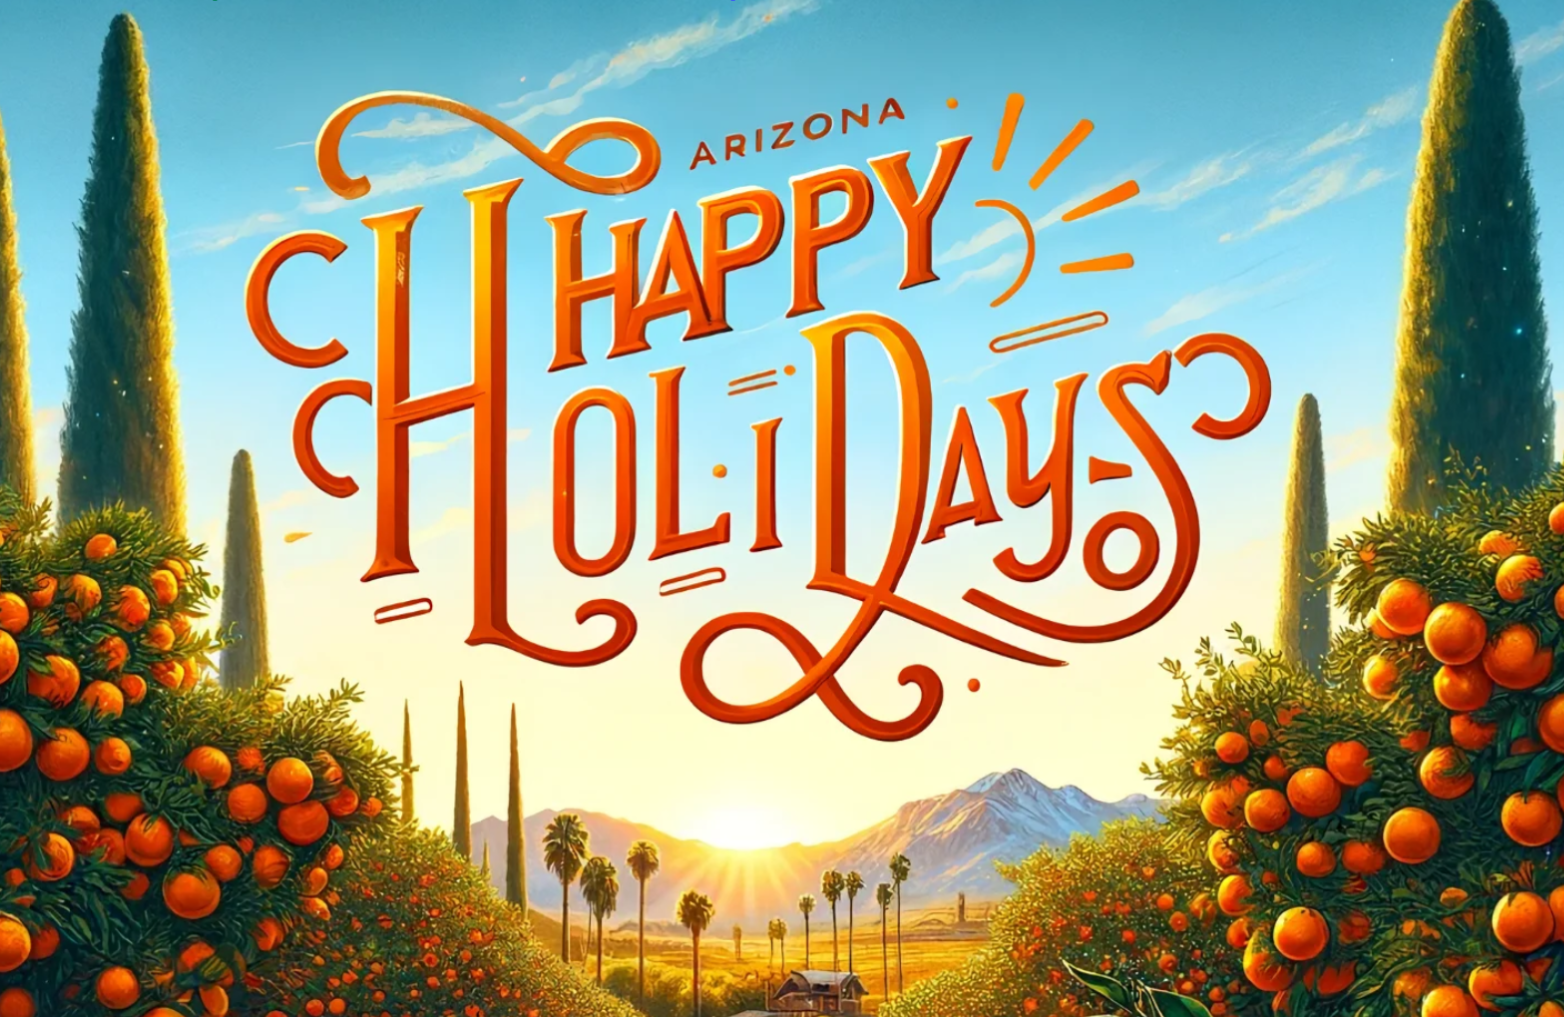 Arizona Orange Co Happy Holidays Card